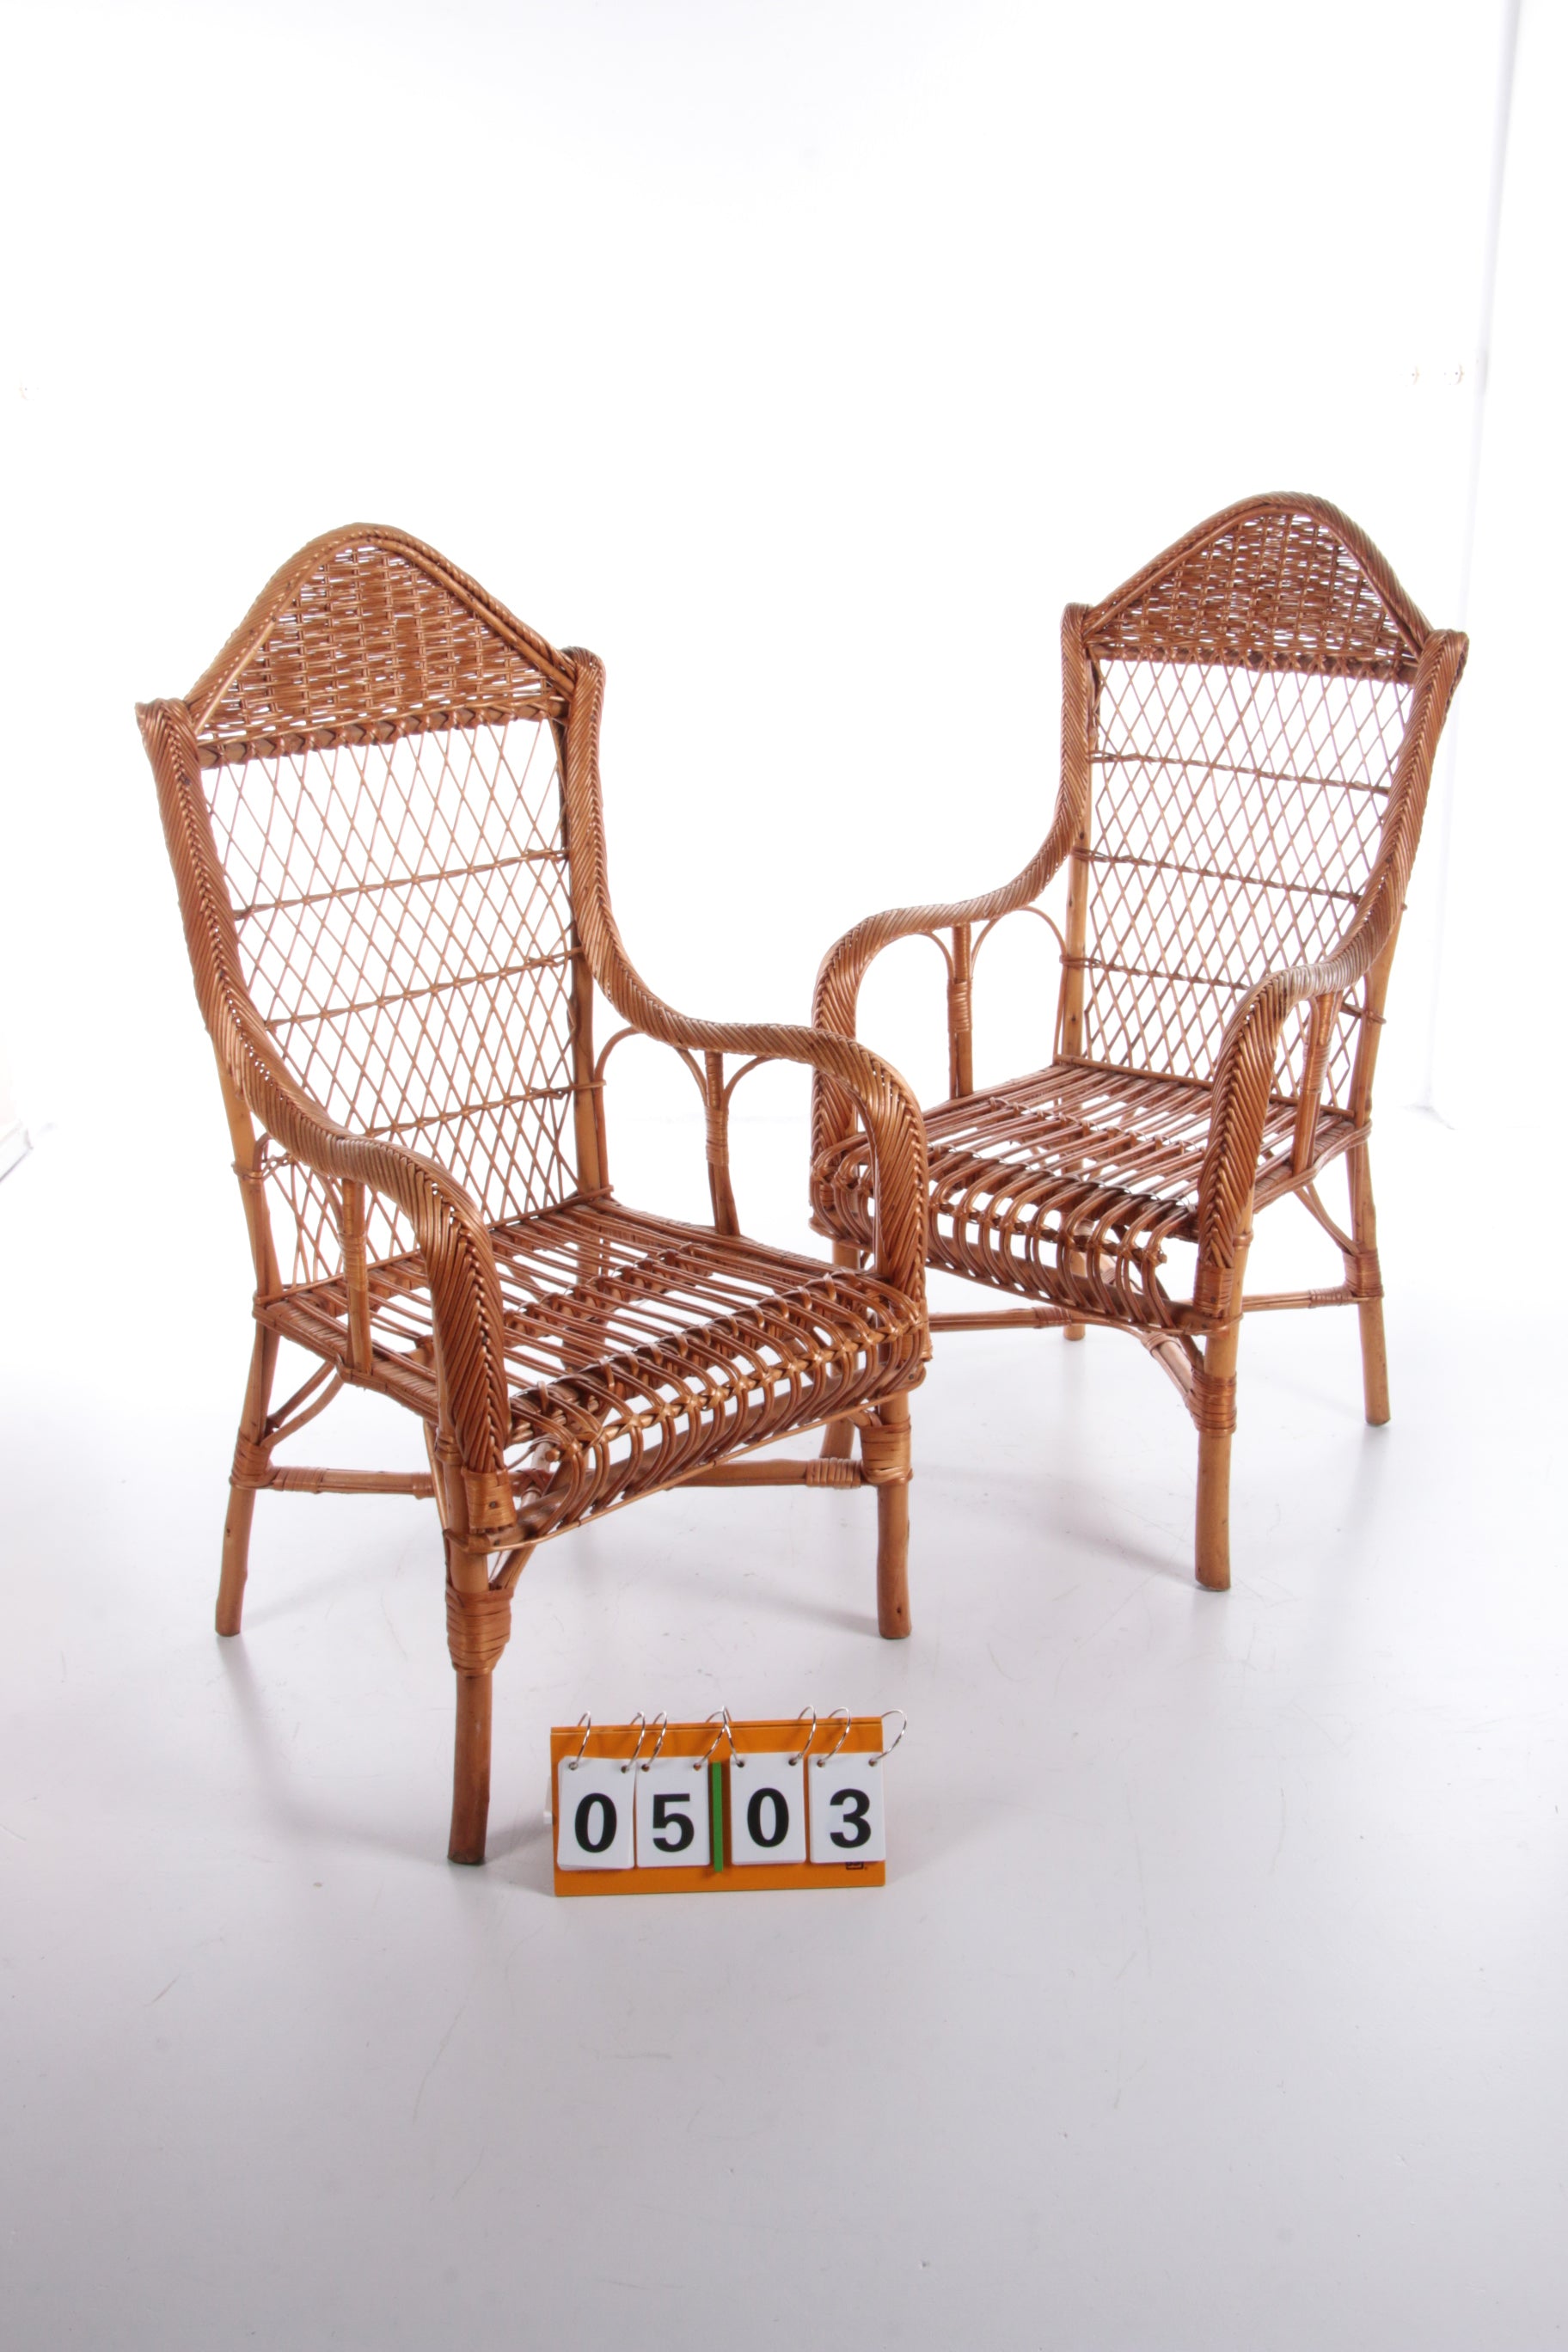 land Ik geloof Postcode Vintage set van 2 Rotan stoelen gemaakt rond 1960s,Nederland. – Timeless-Art